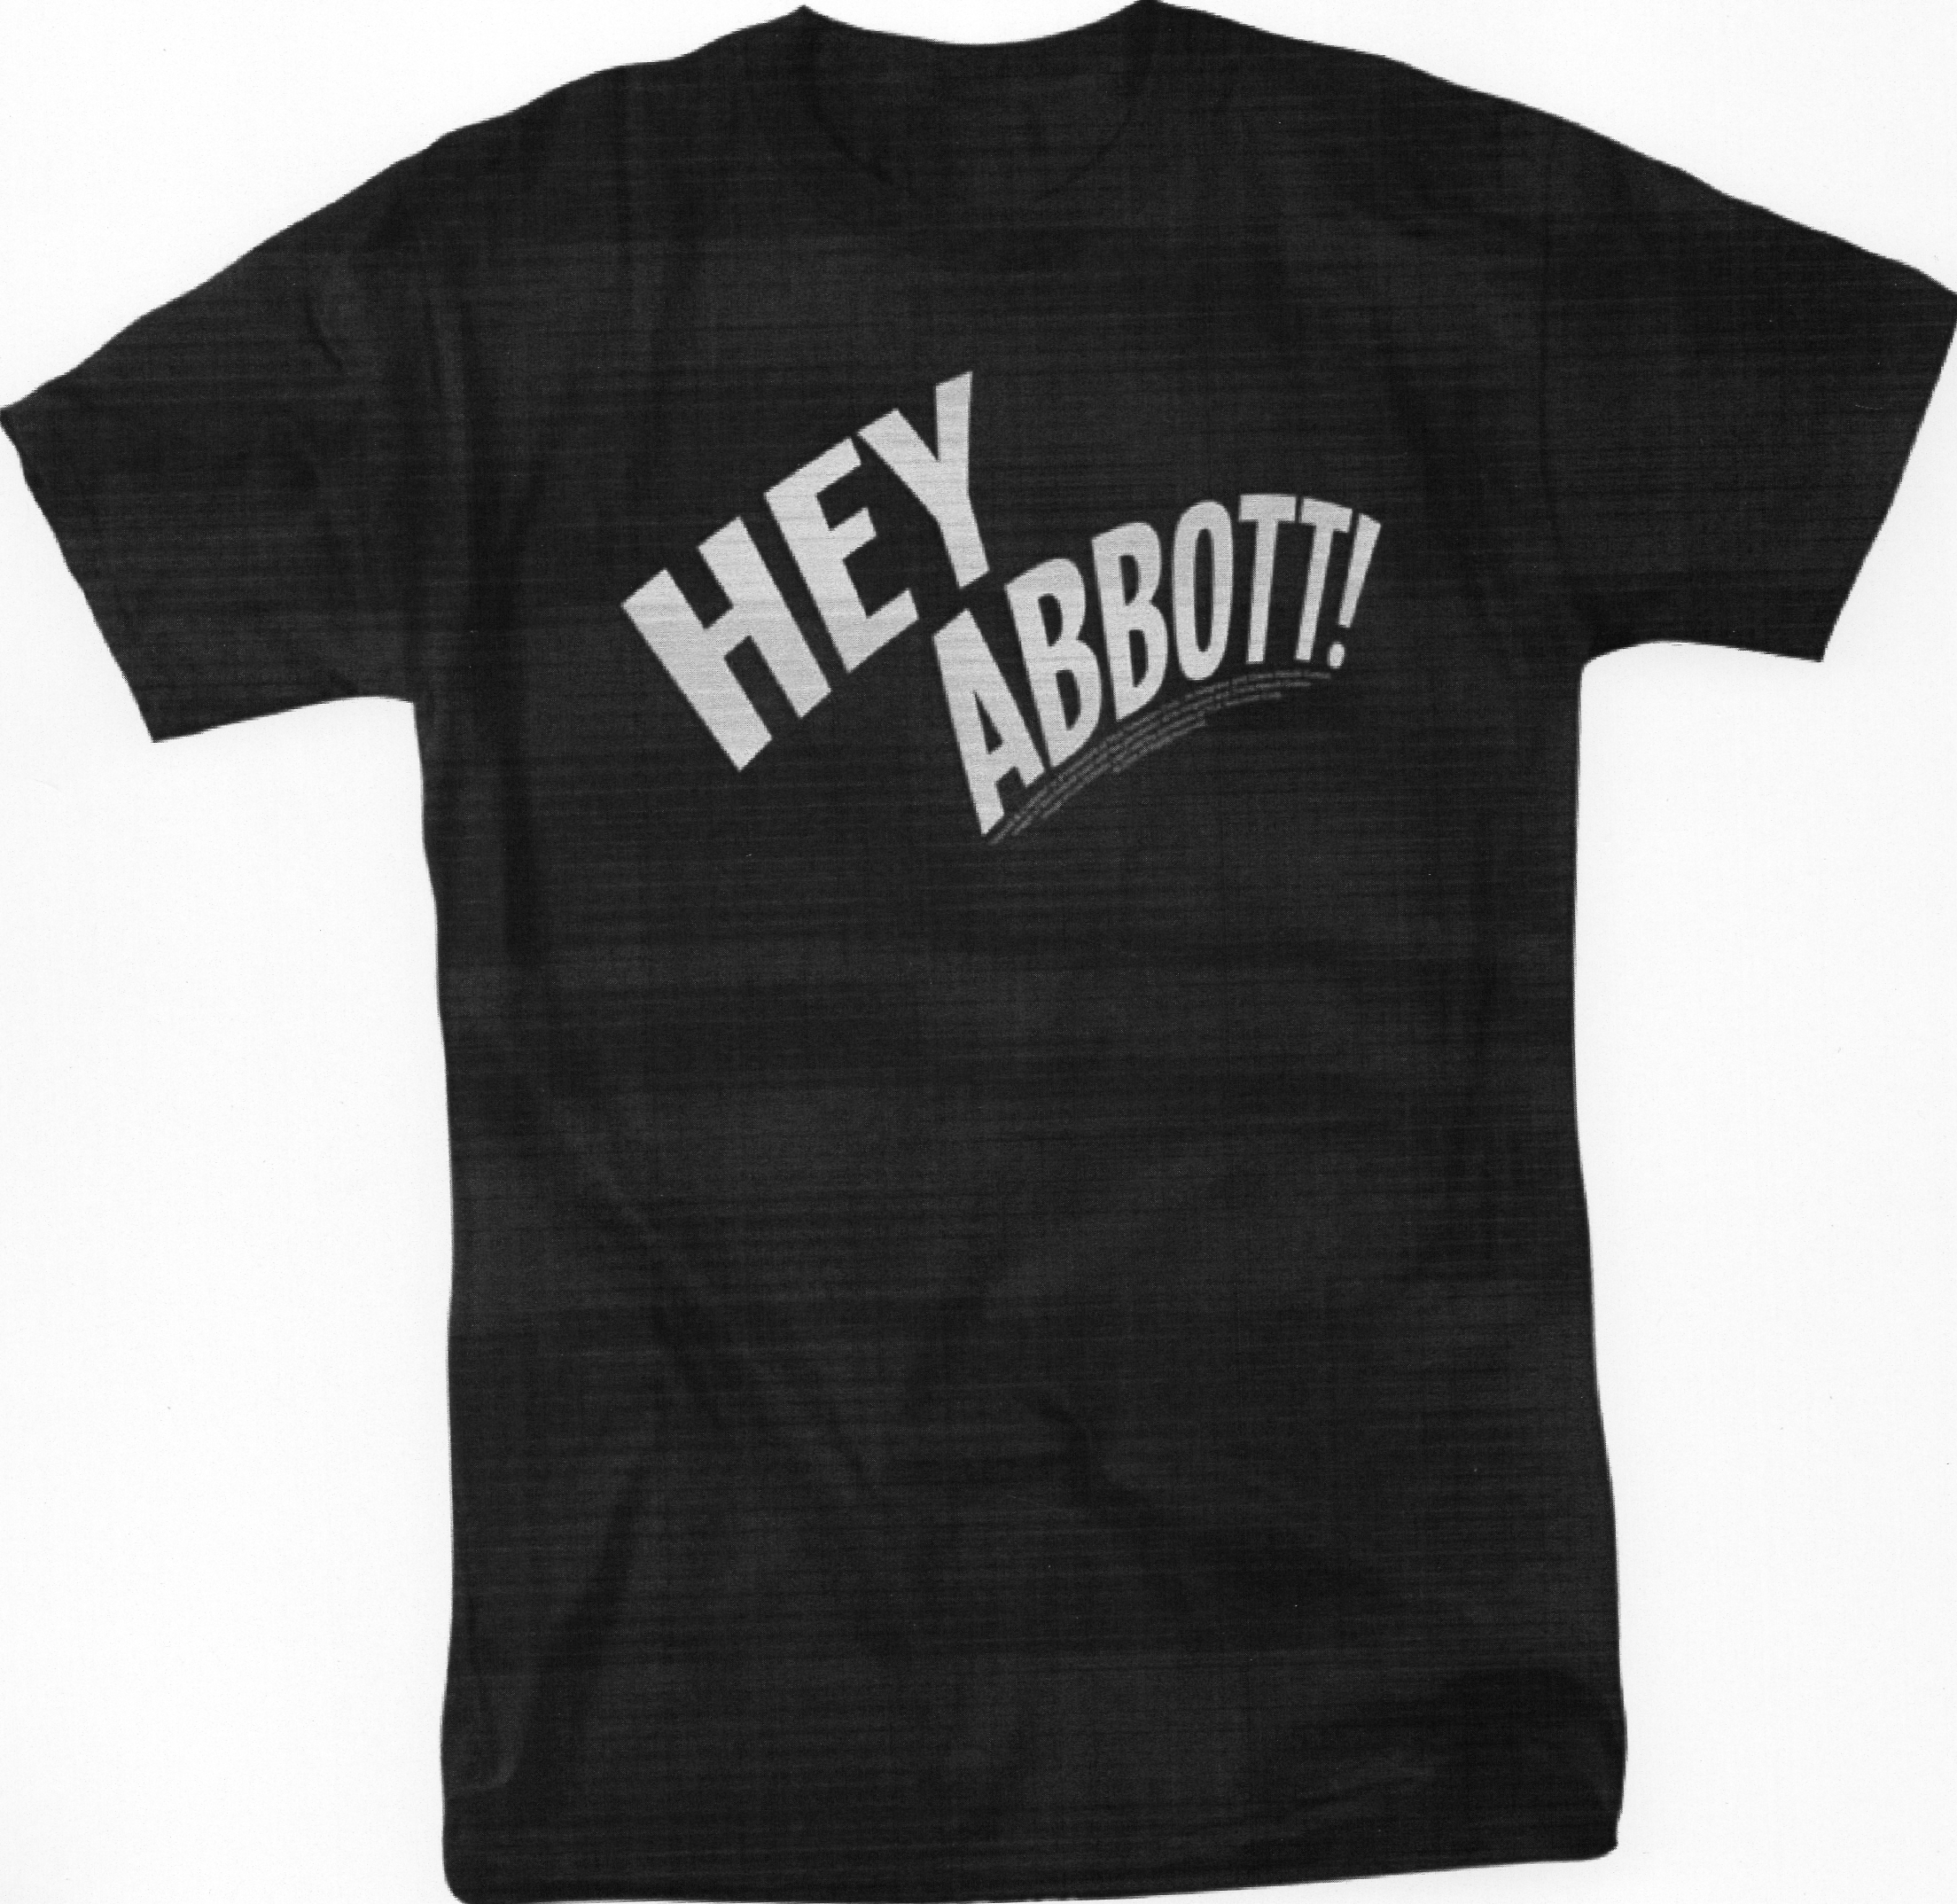 Hey, Abbott! Short Sleeve Tee - Click Image to Close